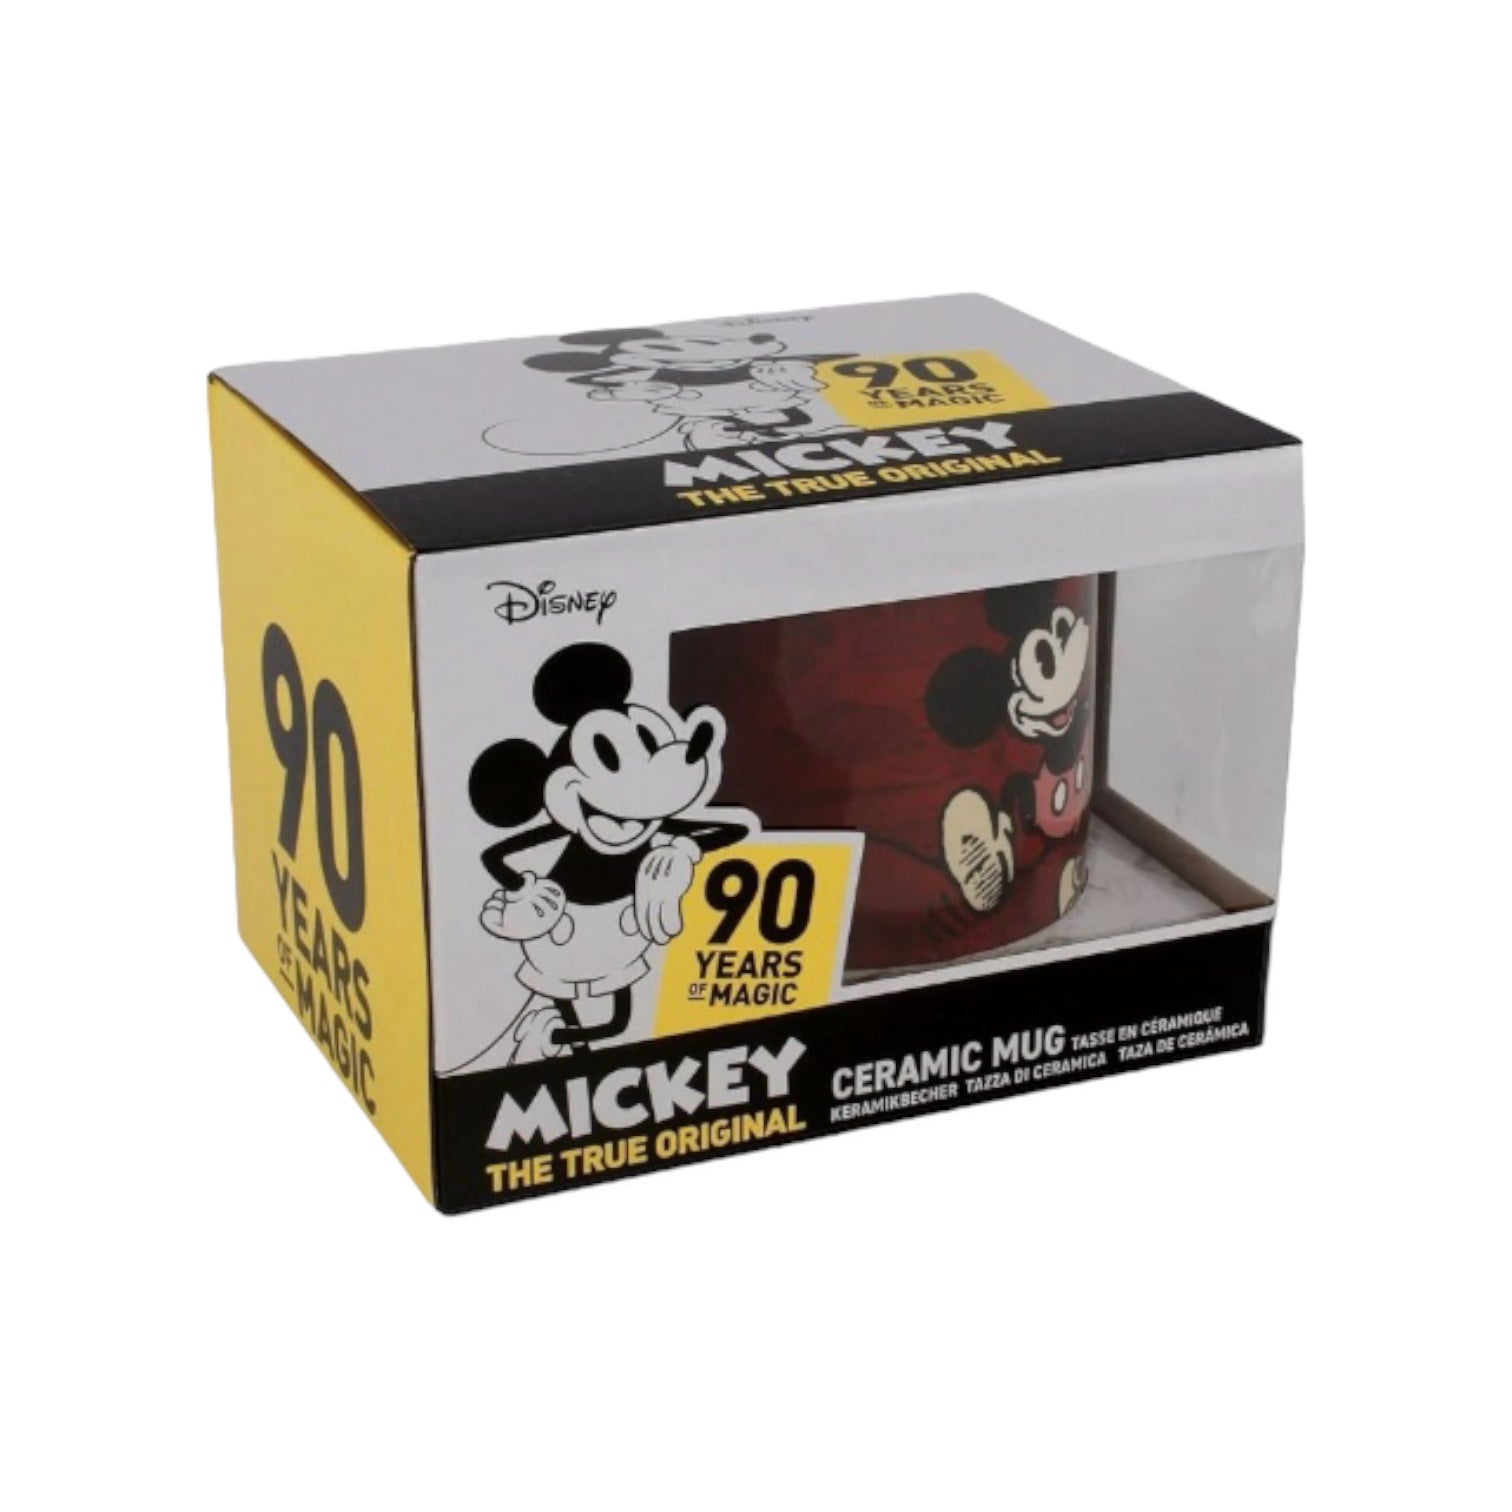 Mickey Ceramic Mug! Disney, 90 Years Of Magic